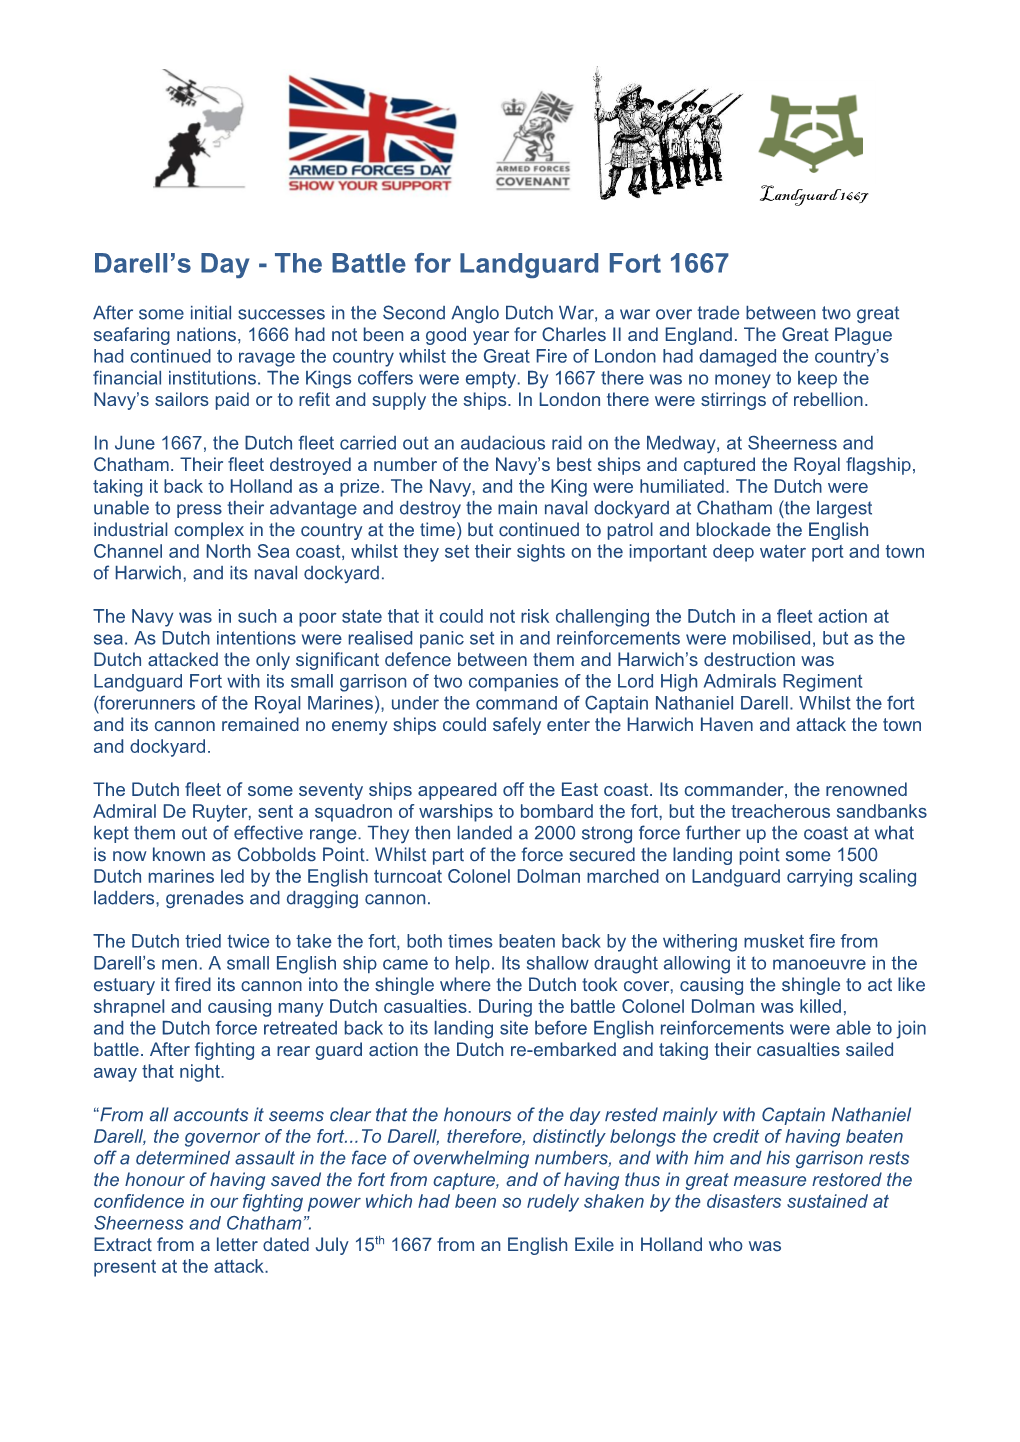 The Battle for Landguard Fort 1667